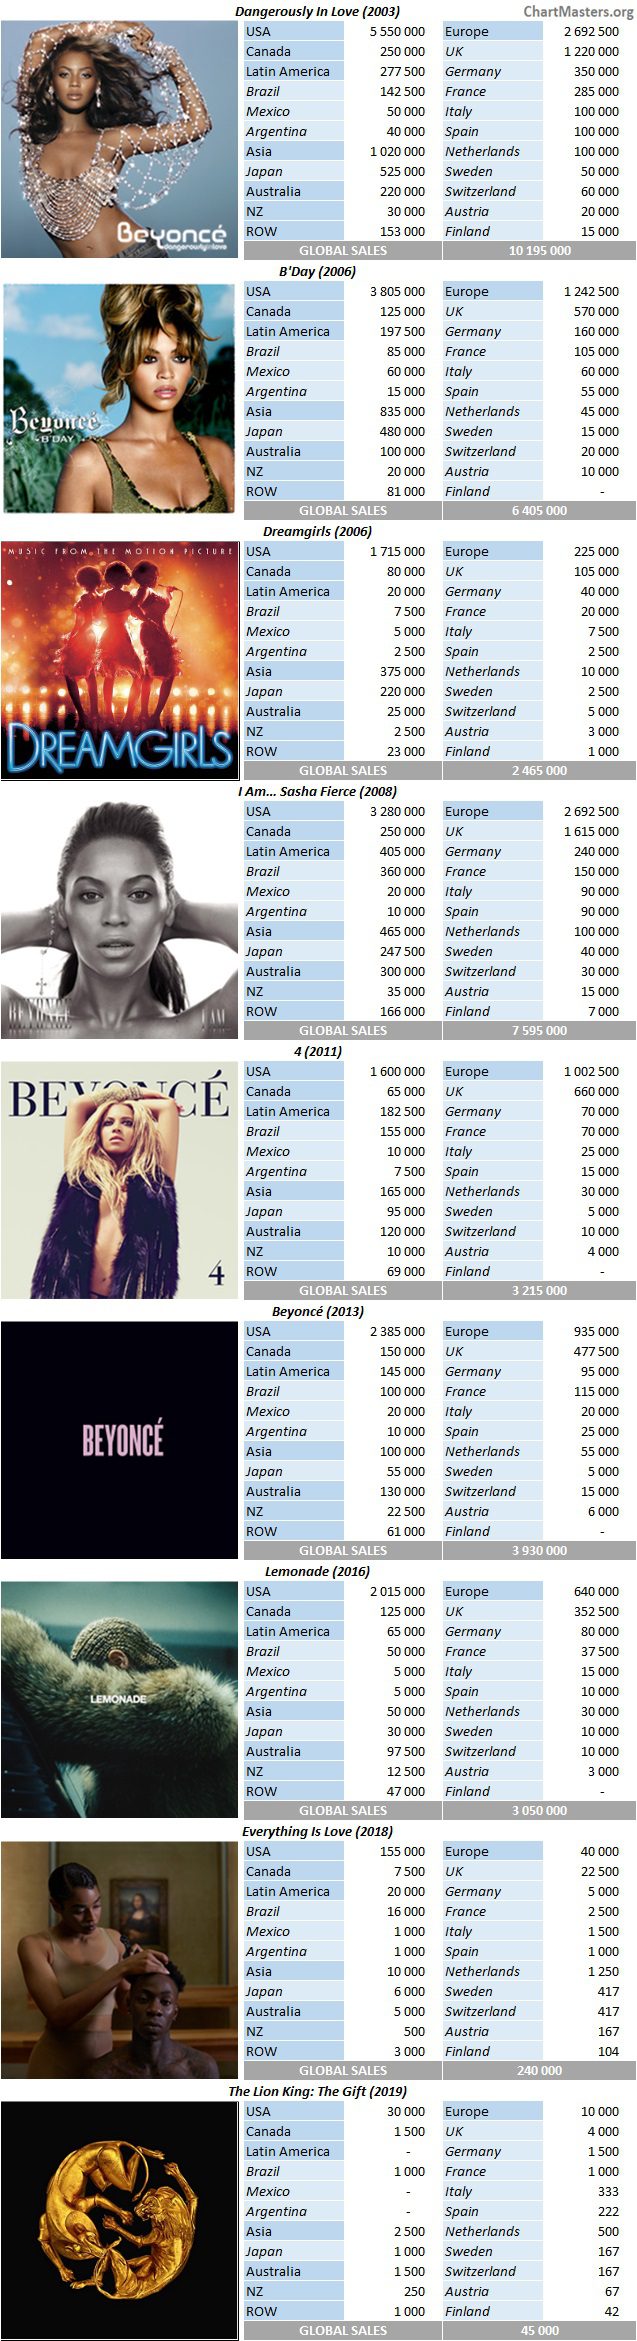 CSPC Beyonce album sales breakdowns